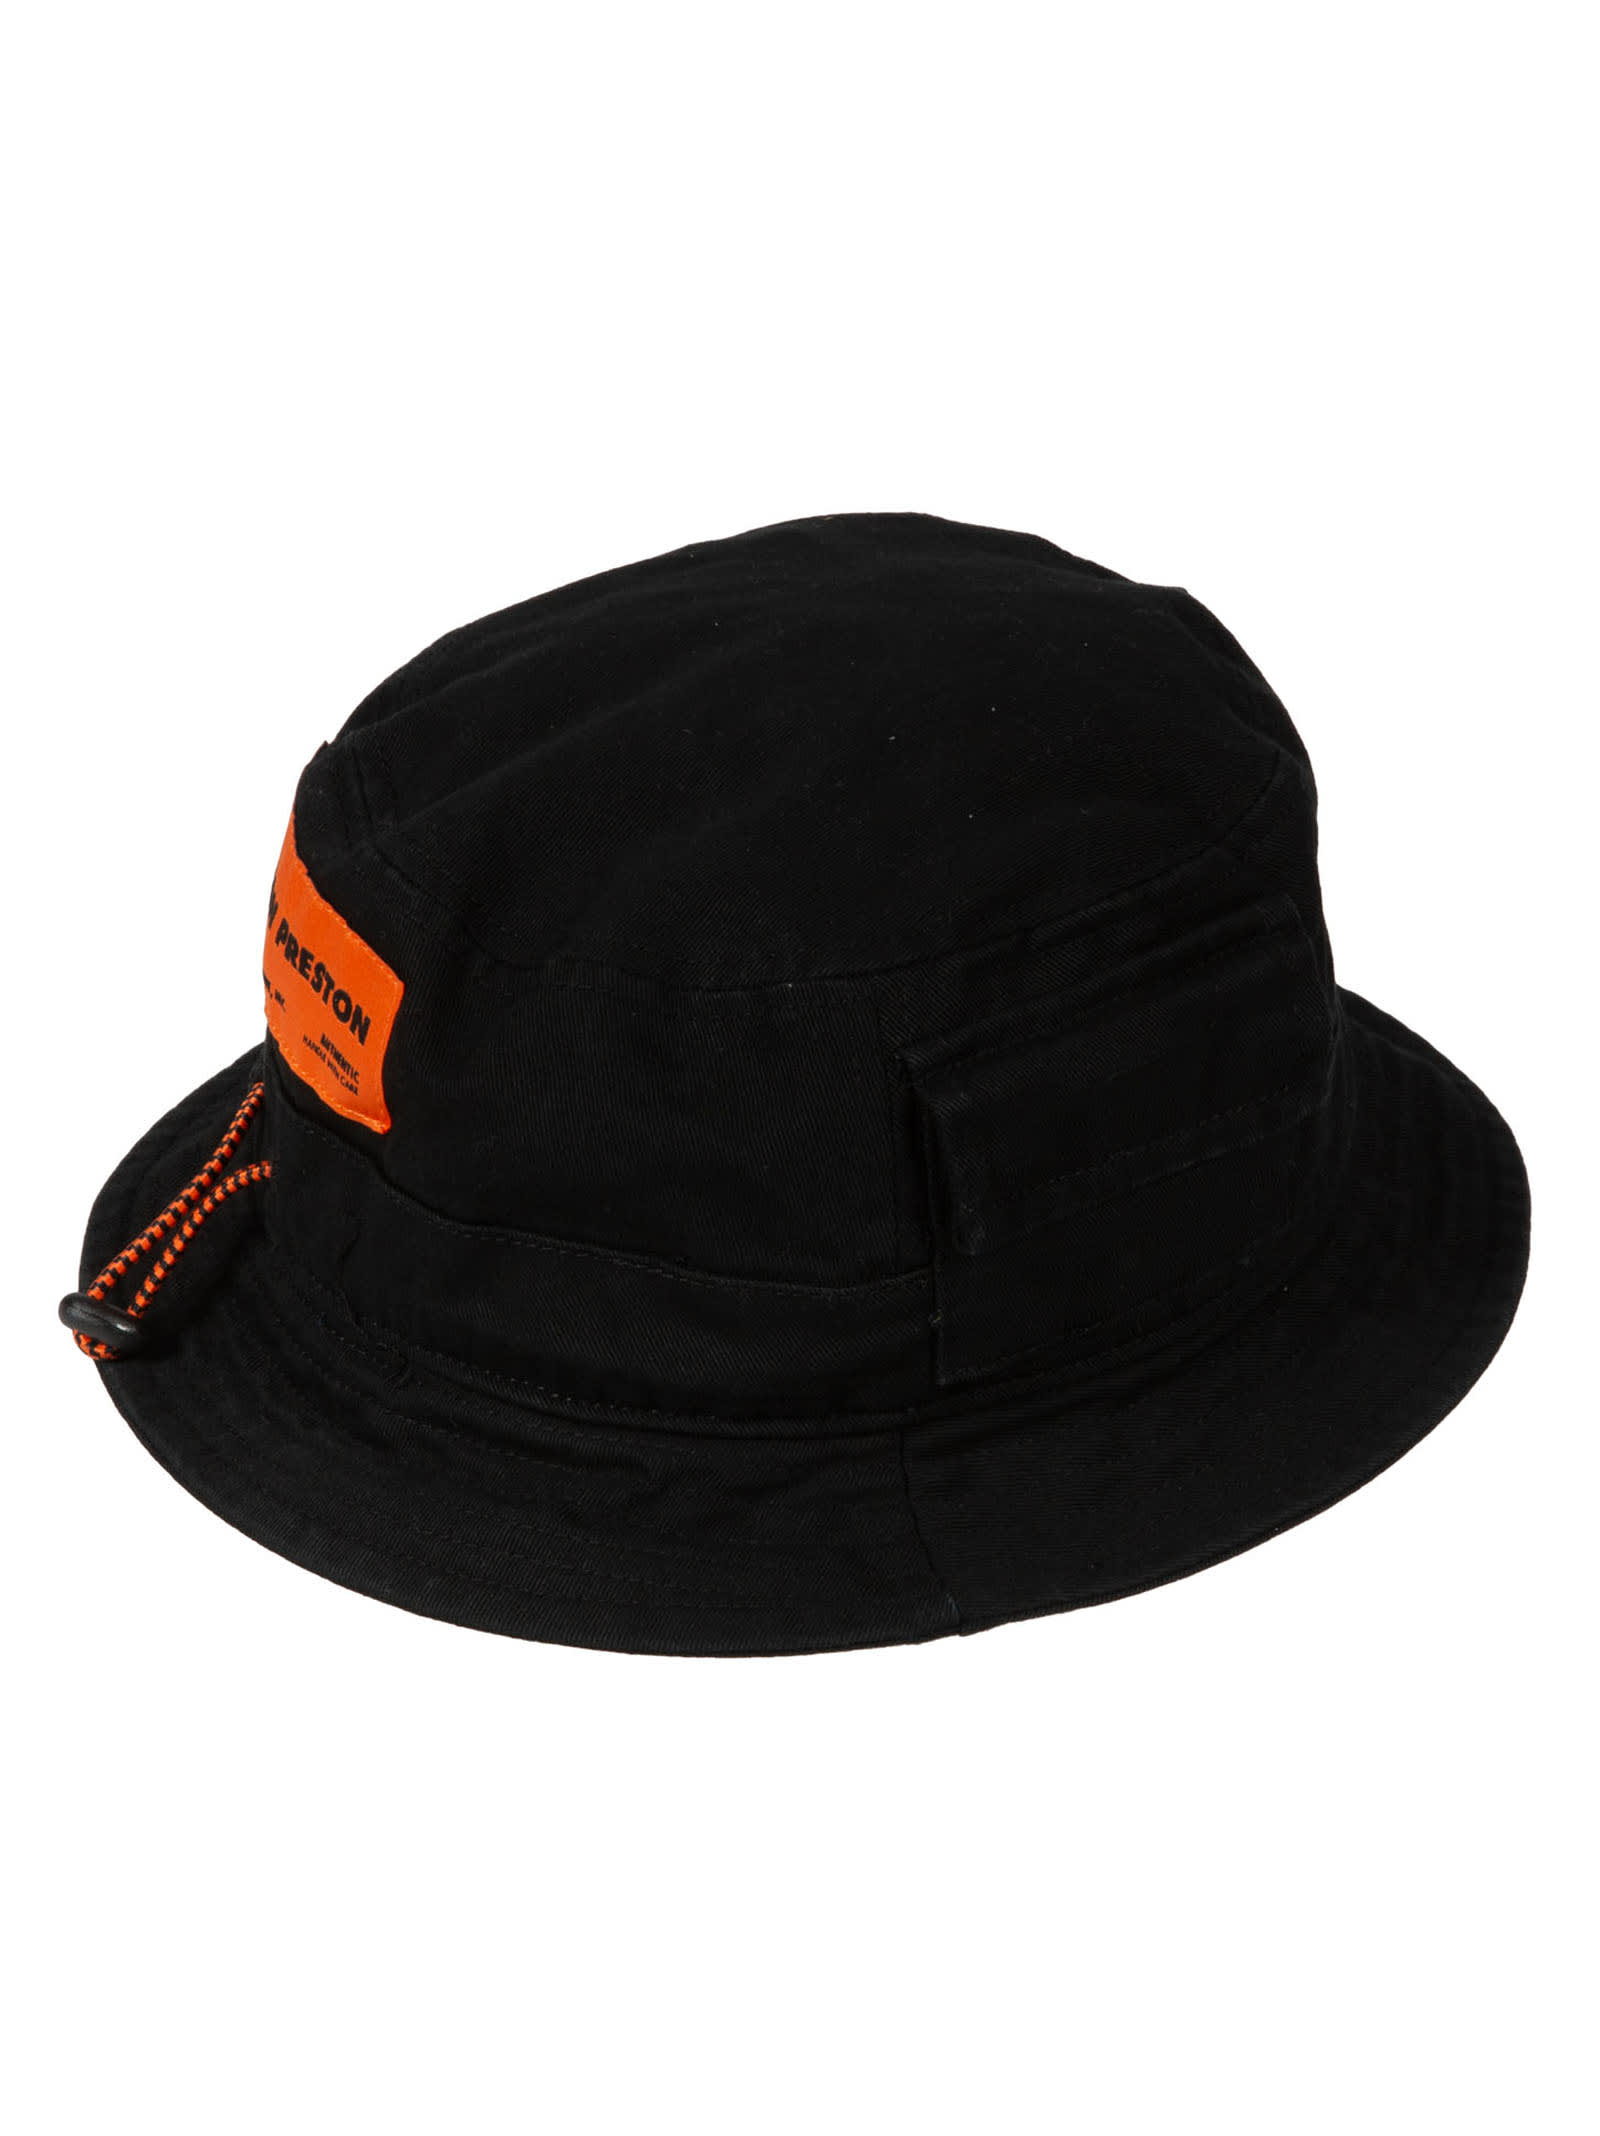 HERON PRESTON Cotton Twill Bucket Hat